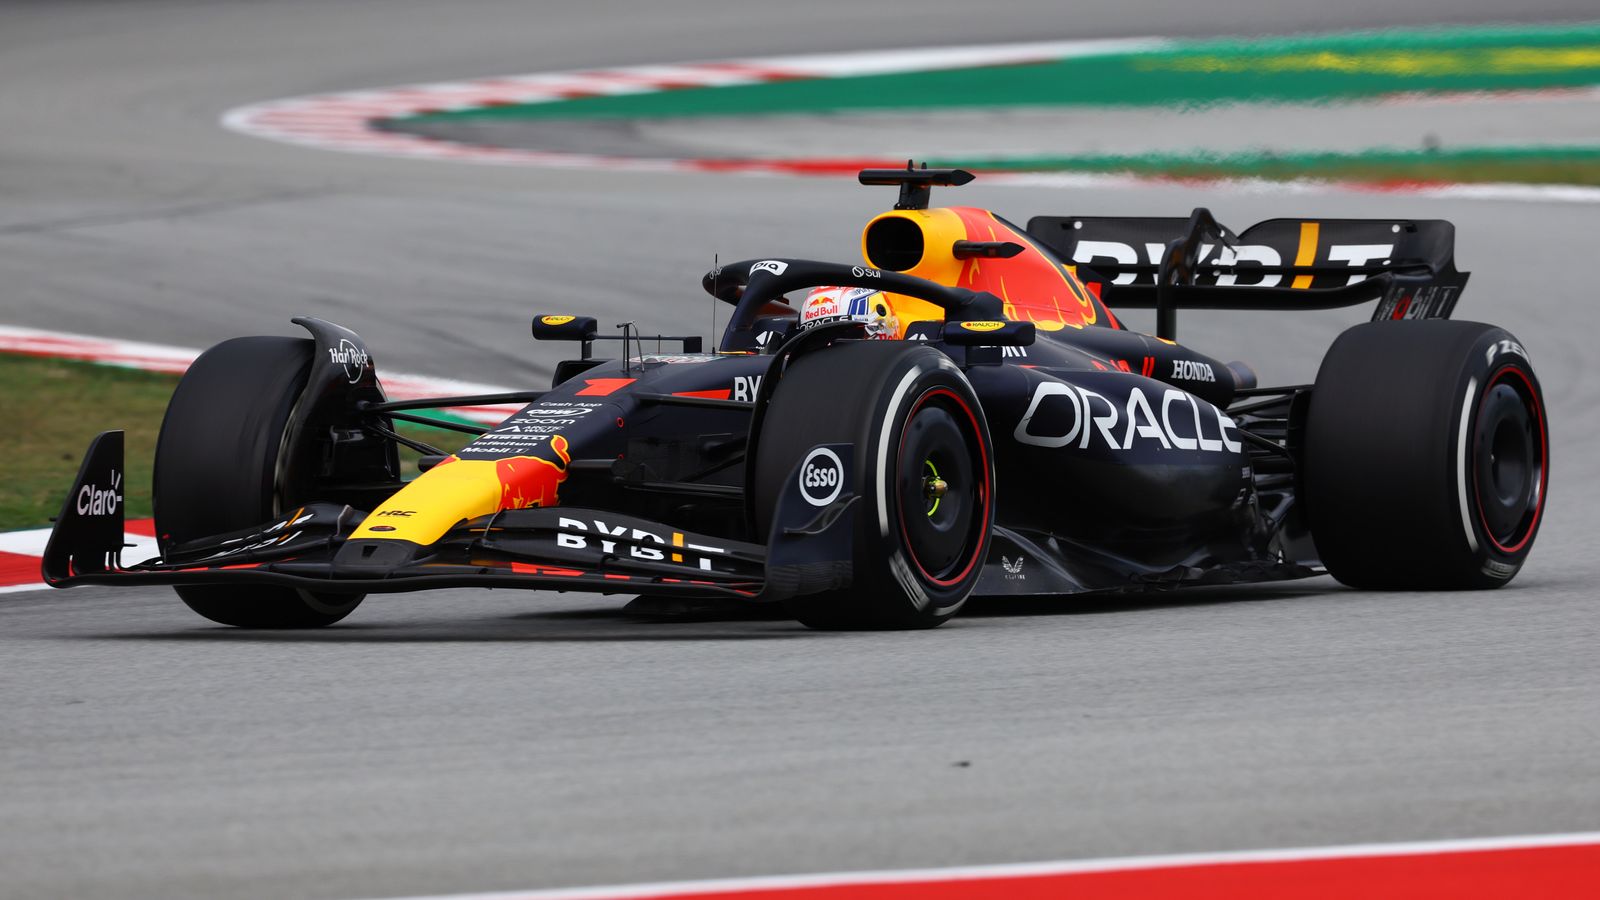 Spanish GP: Max Verstappen takes dominant win as Lewis Hamilton second amid Mercedes improvement